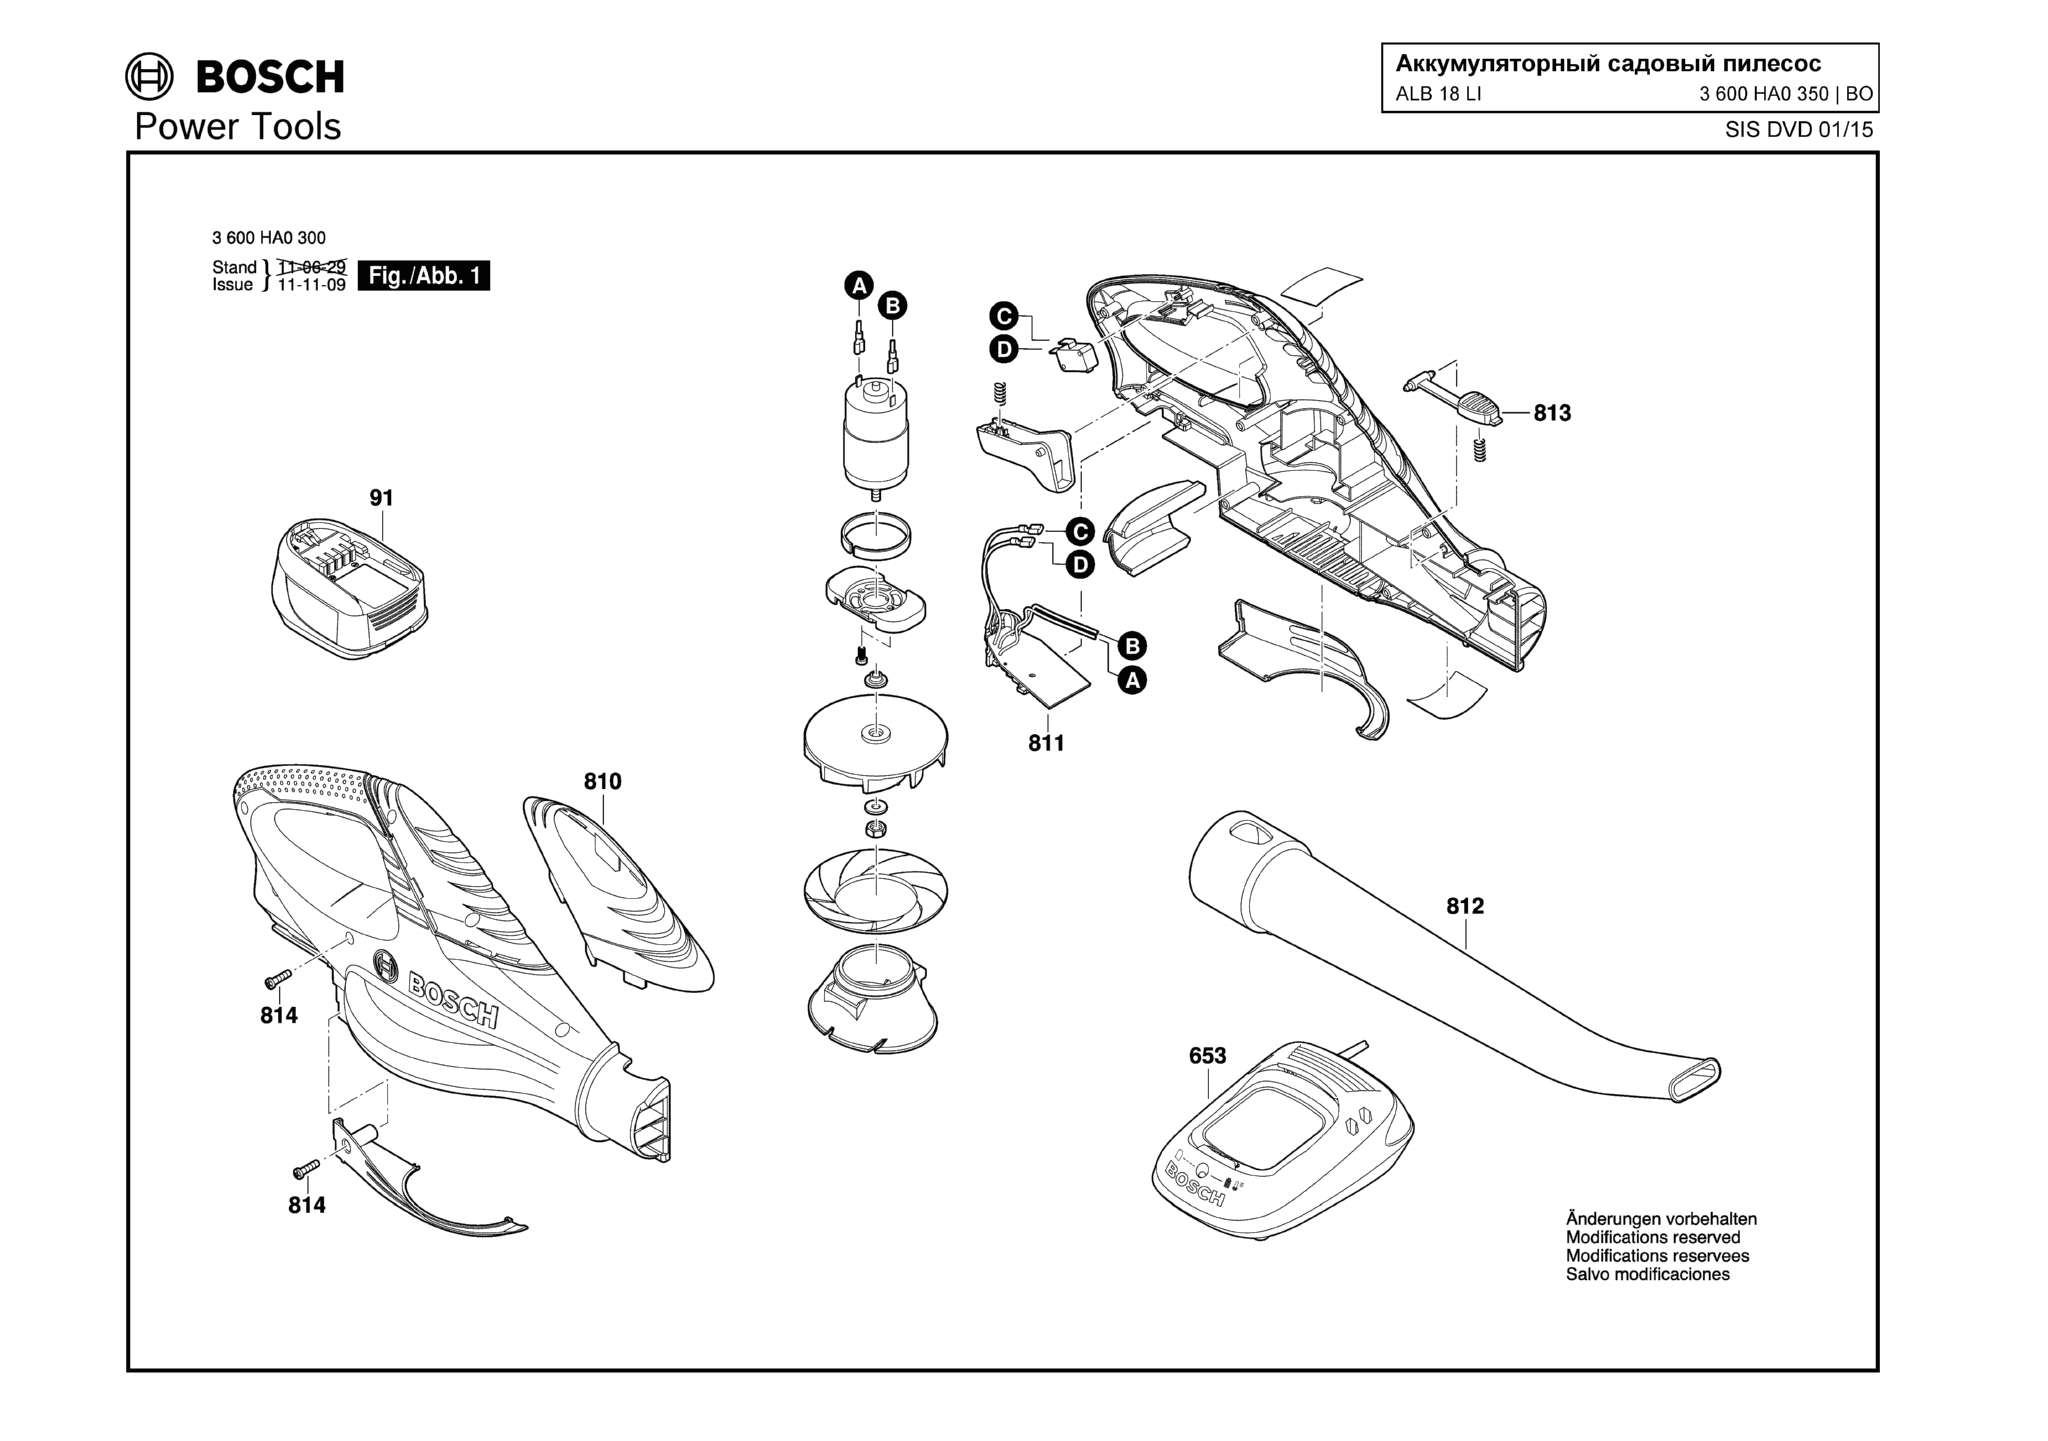 Запчасти, схема и деталировка Bosch ALB 18 LI (ТИП 3600HA0350)